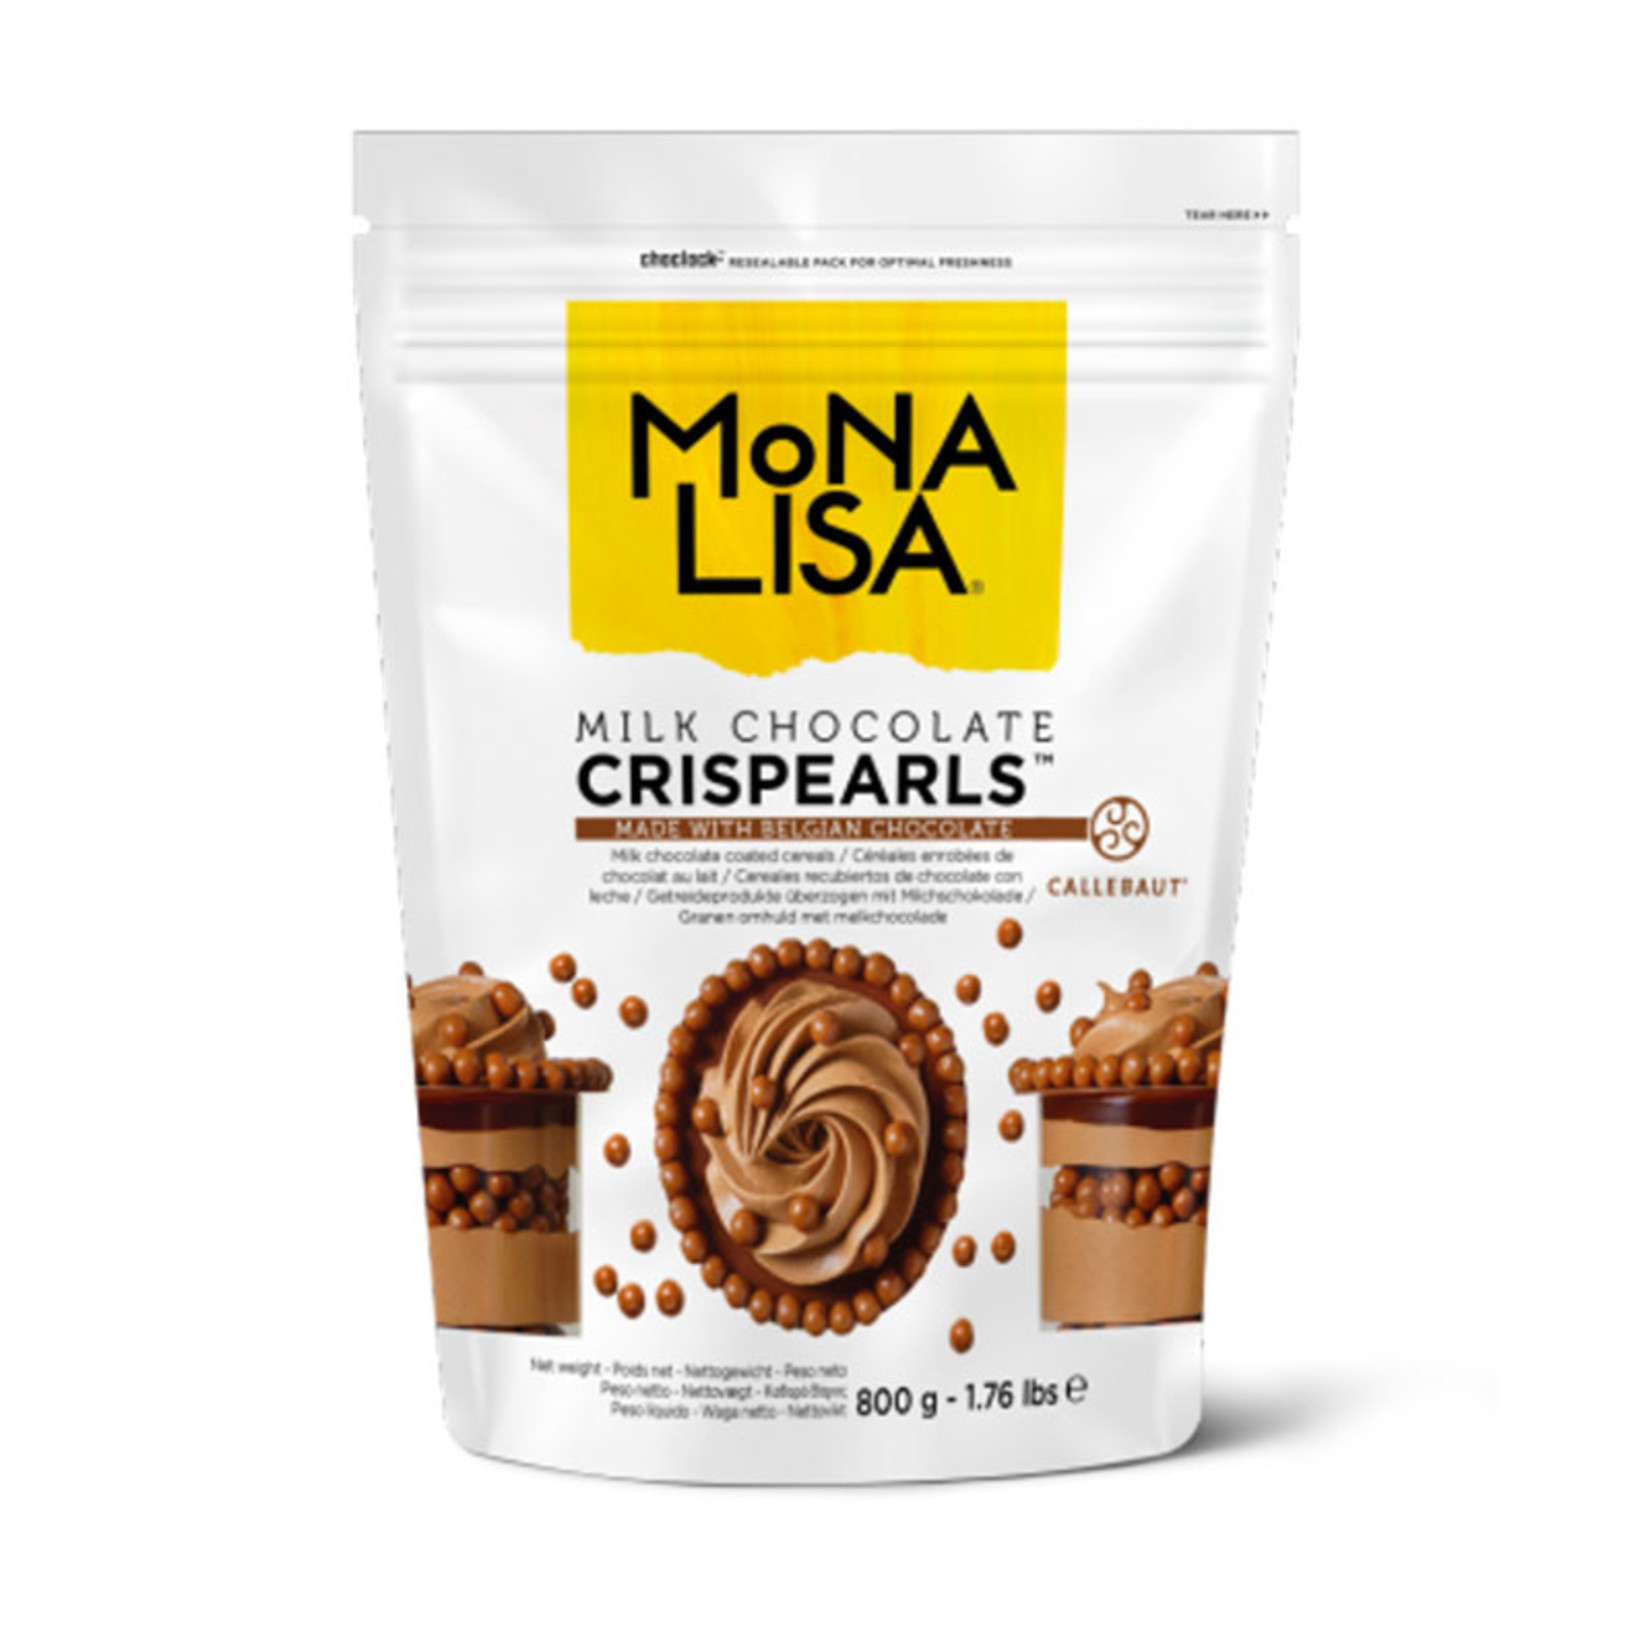 Mona Lisa Mona Lisa - Milk Chocolate Crispearls - 800g, CEM-CC-M1CRIE0-W97